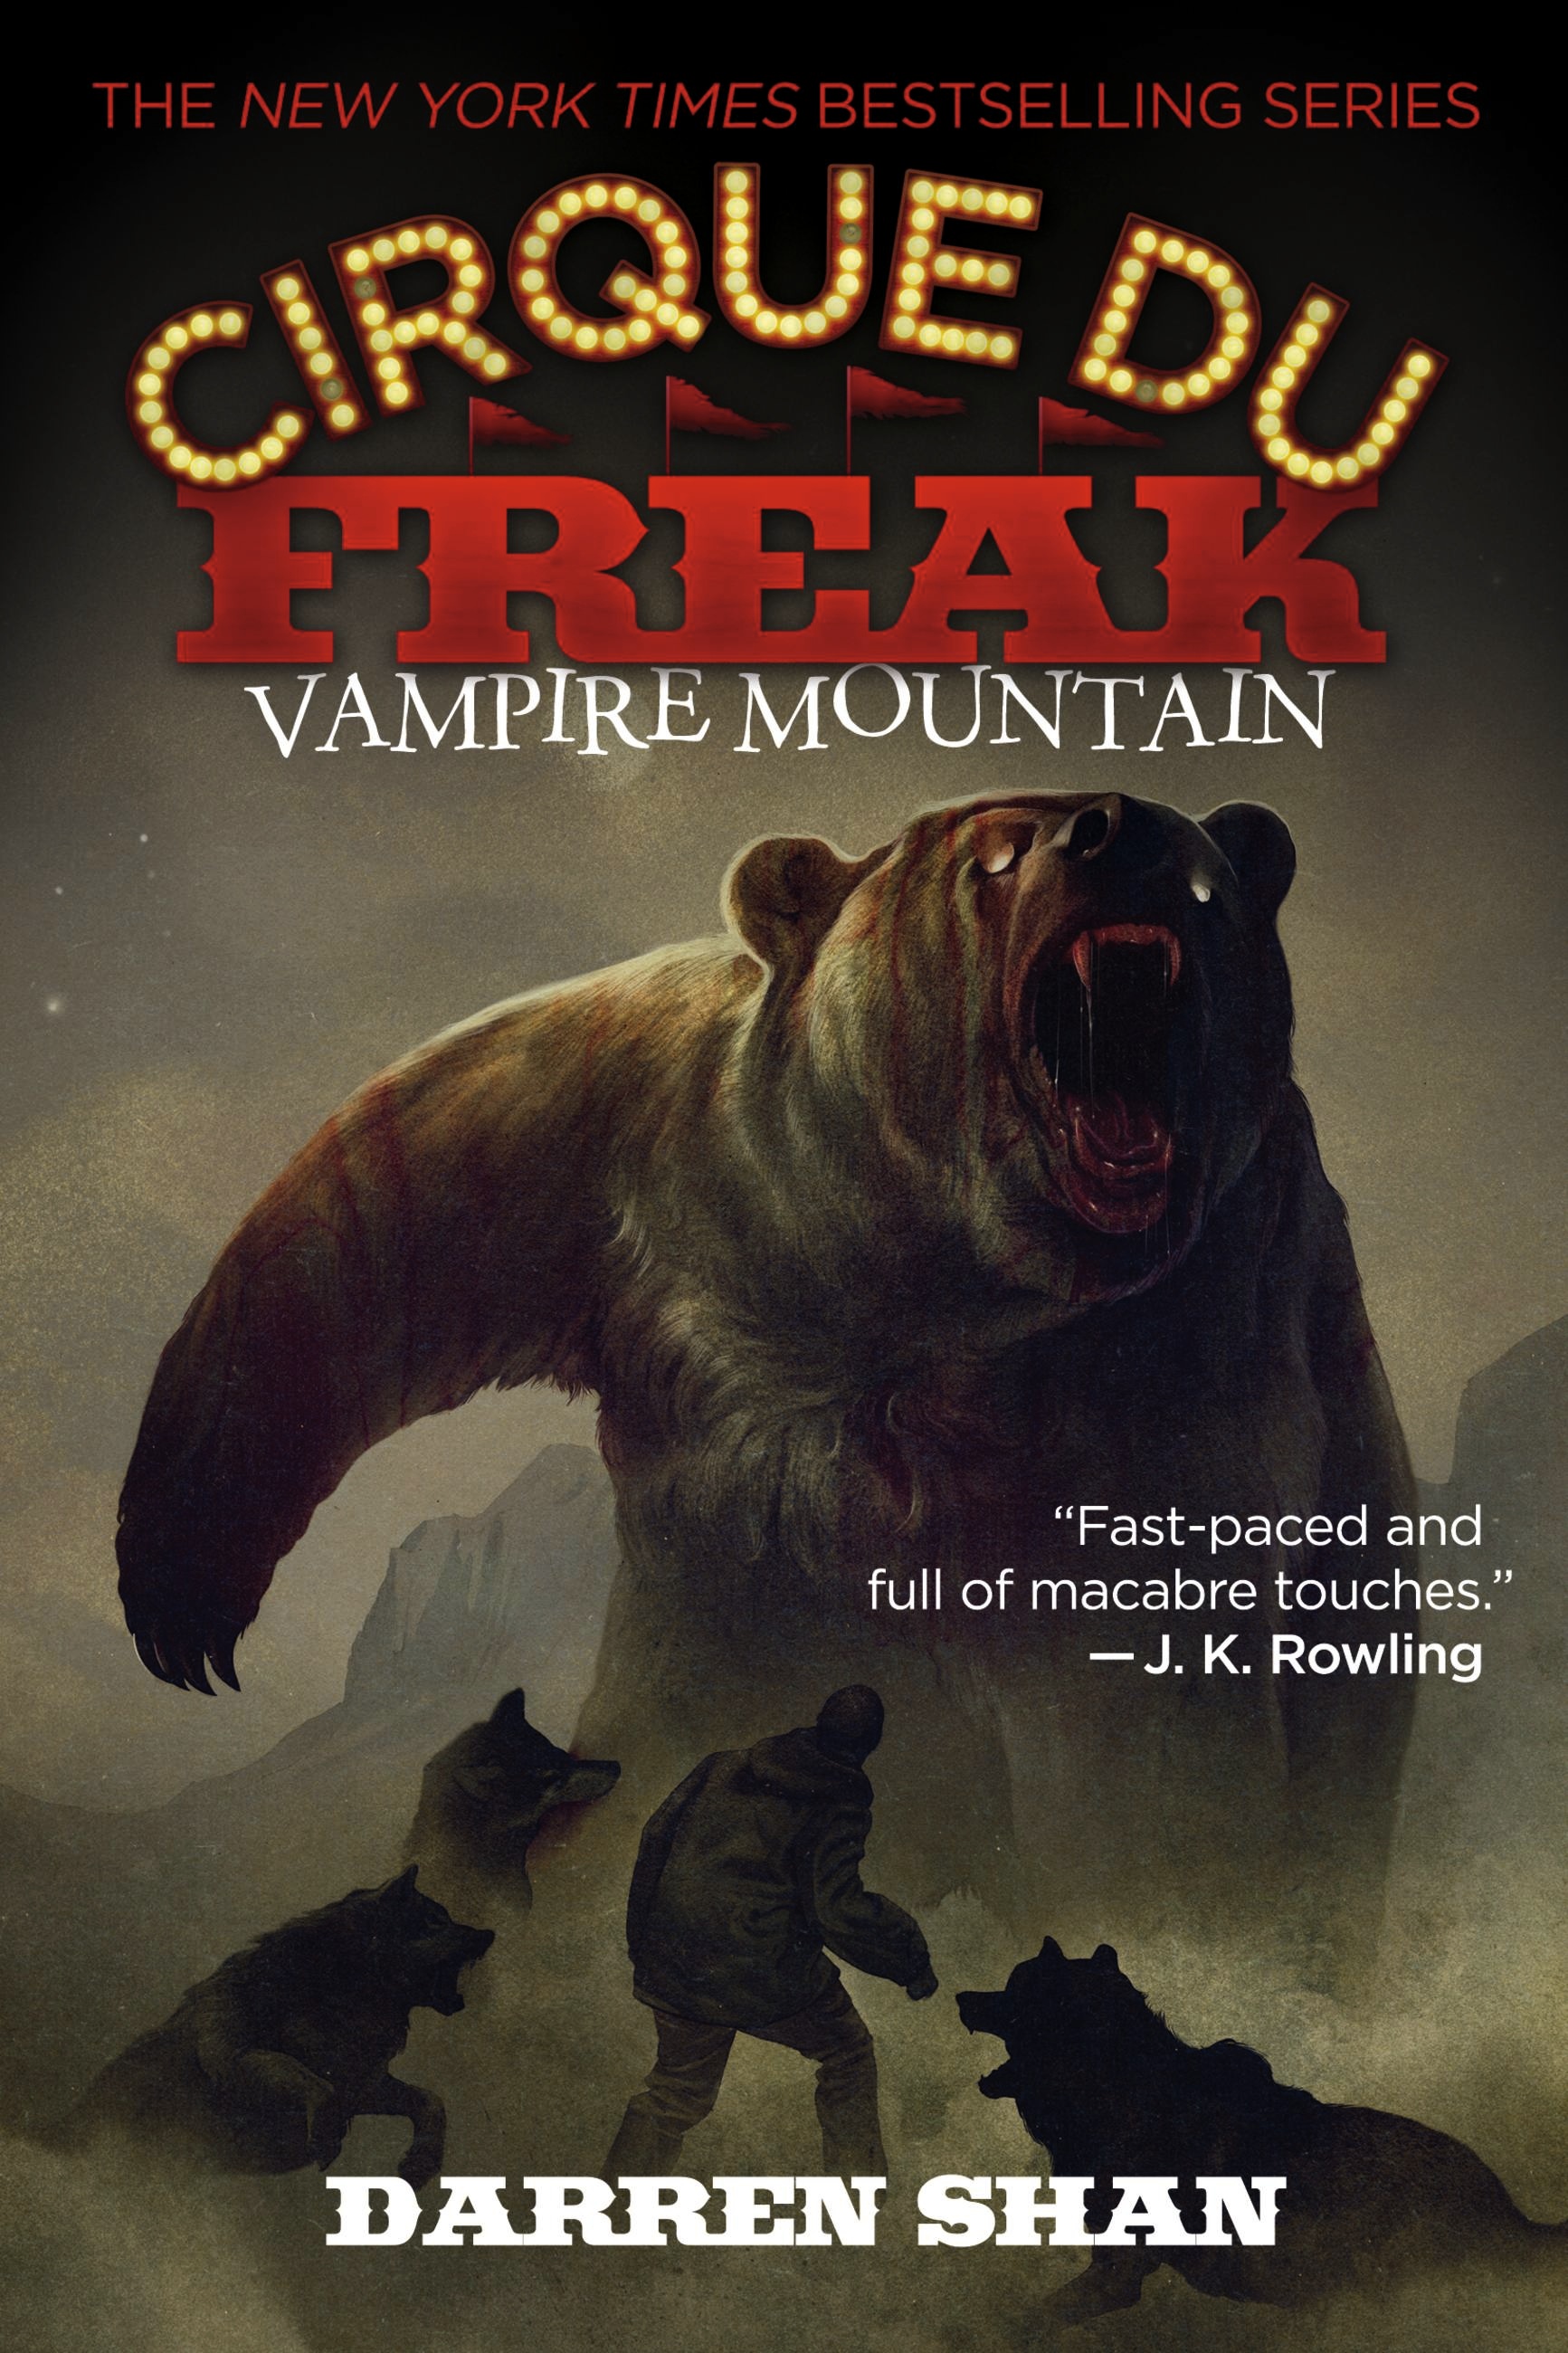 Cirque Du Freak #4: Vampire Mountain by Darren Shan | Hachette Book Group